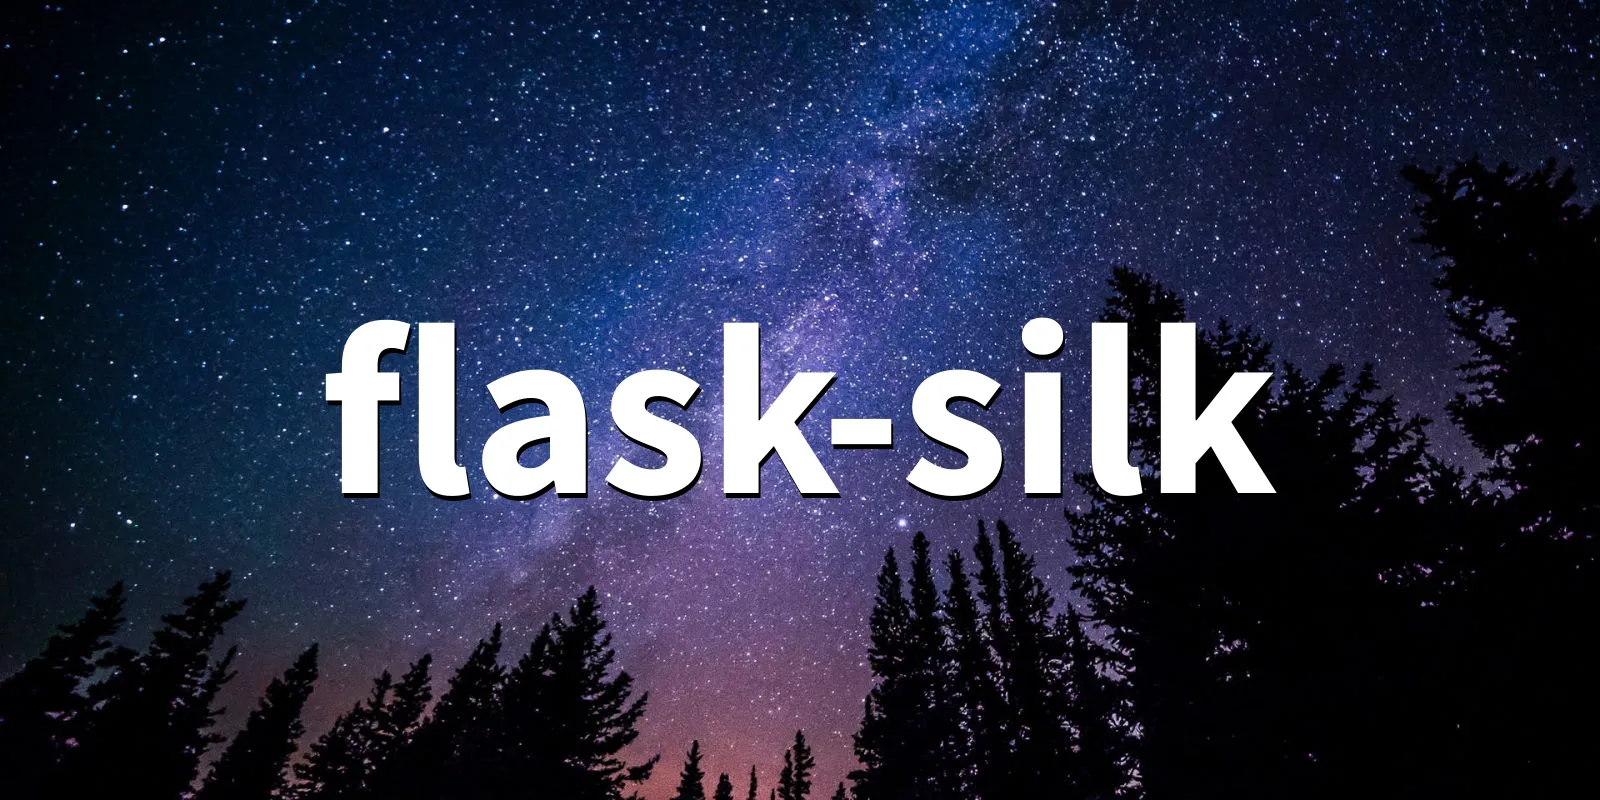 /pkg/f/flask-silk/flask-silk-banner.webp